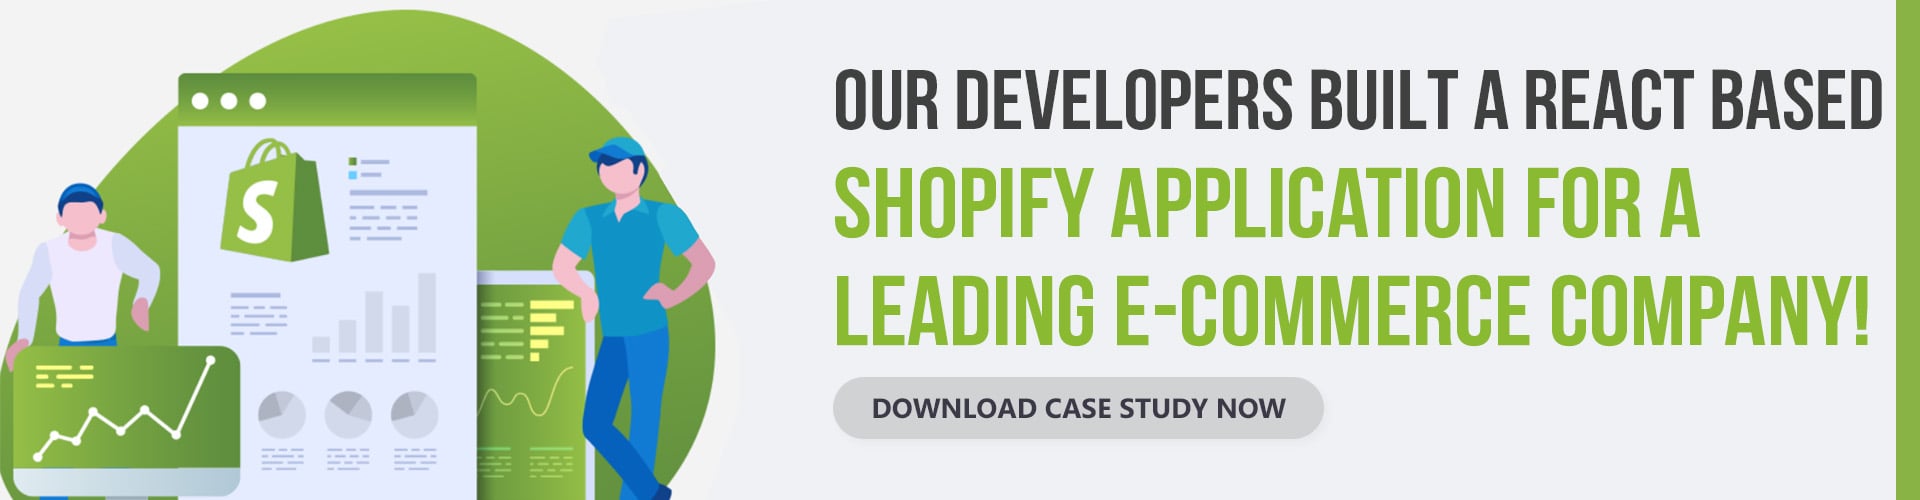 React Based Shopify Application